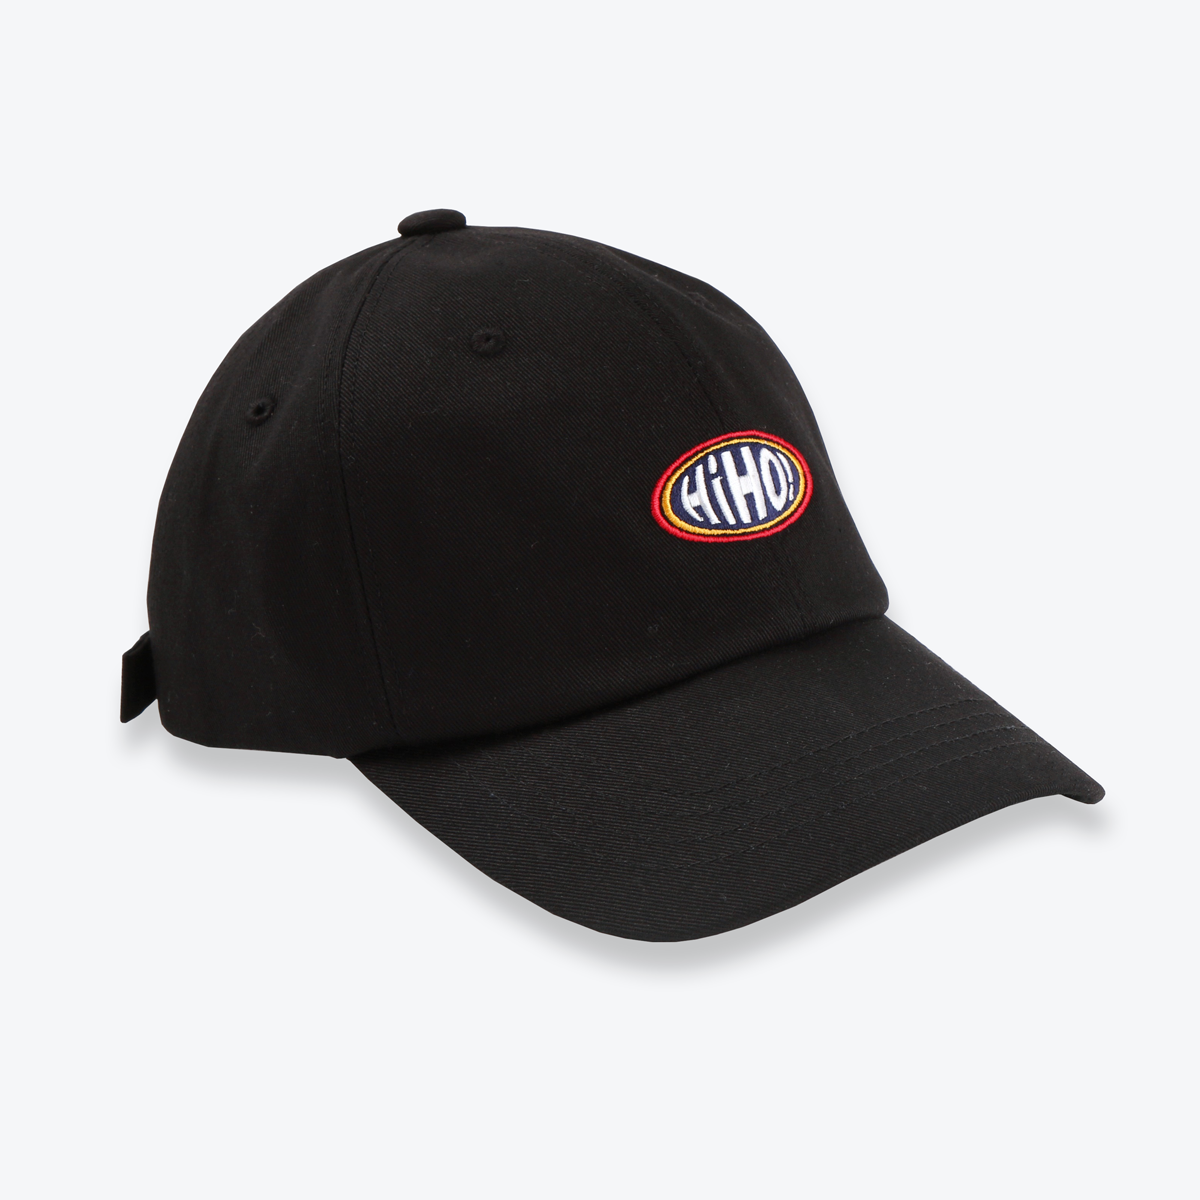 HiHO BALL CAP_black